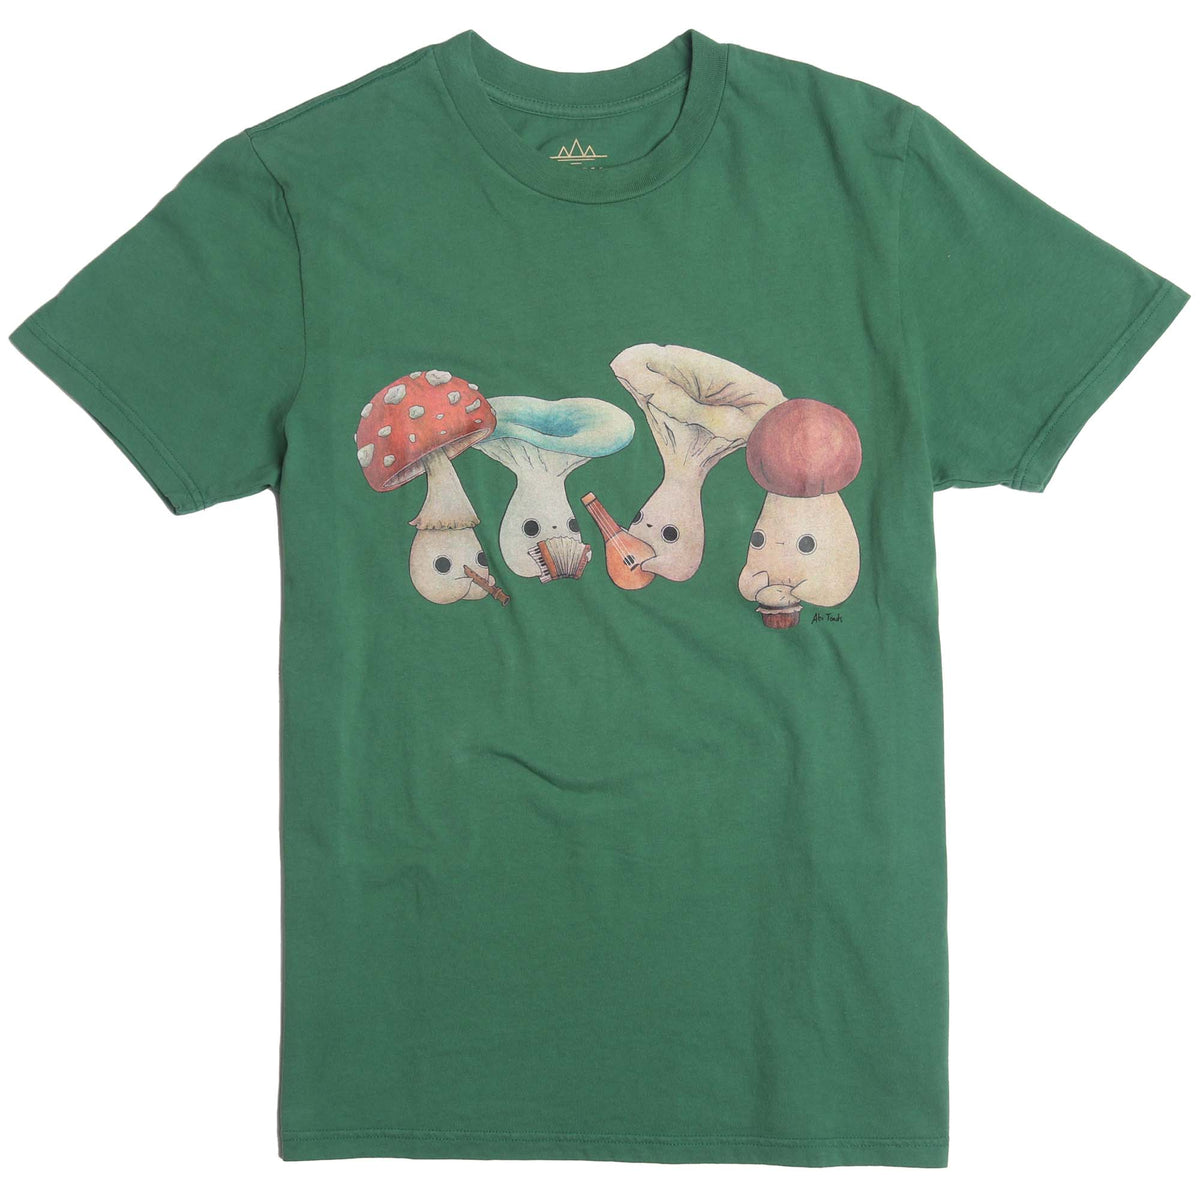 Buy Abi Toads Fungi tee | Altru Apparel | High Quality Fashion T-shirts ...